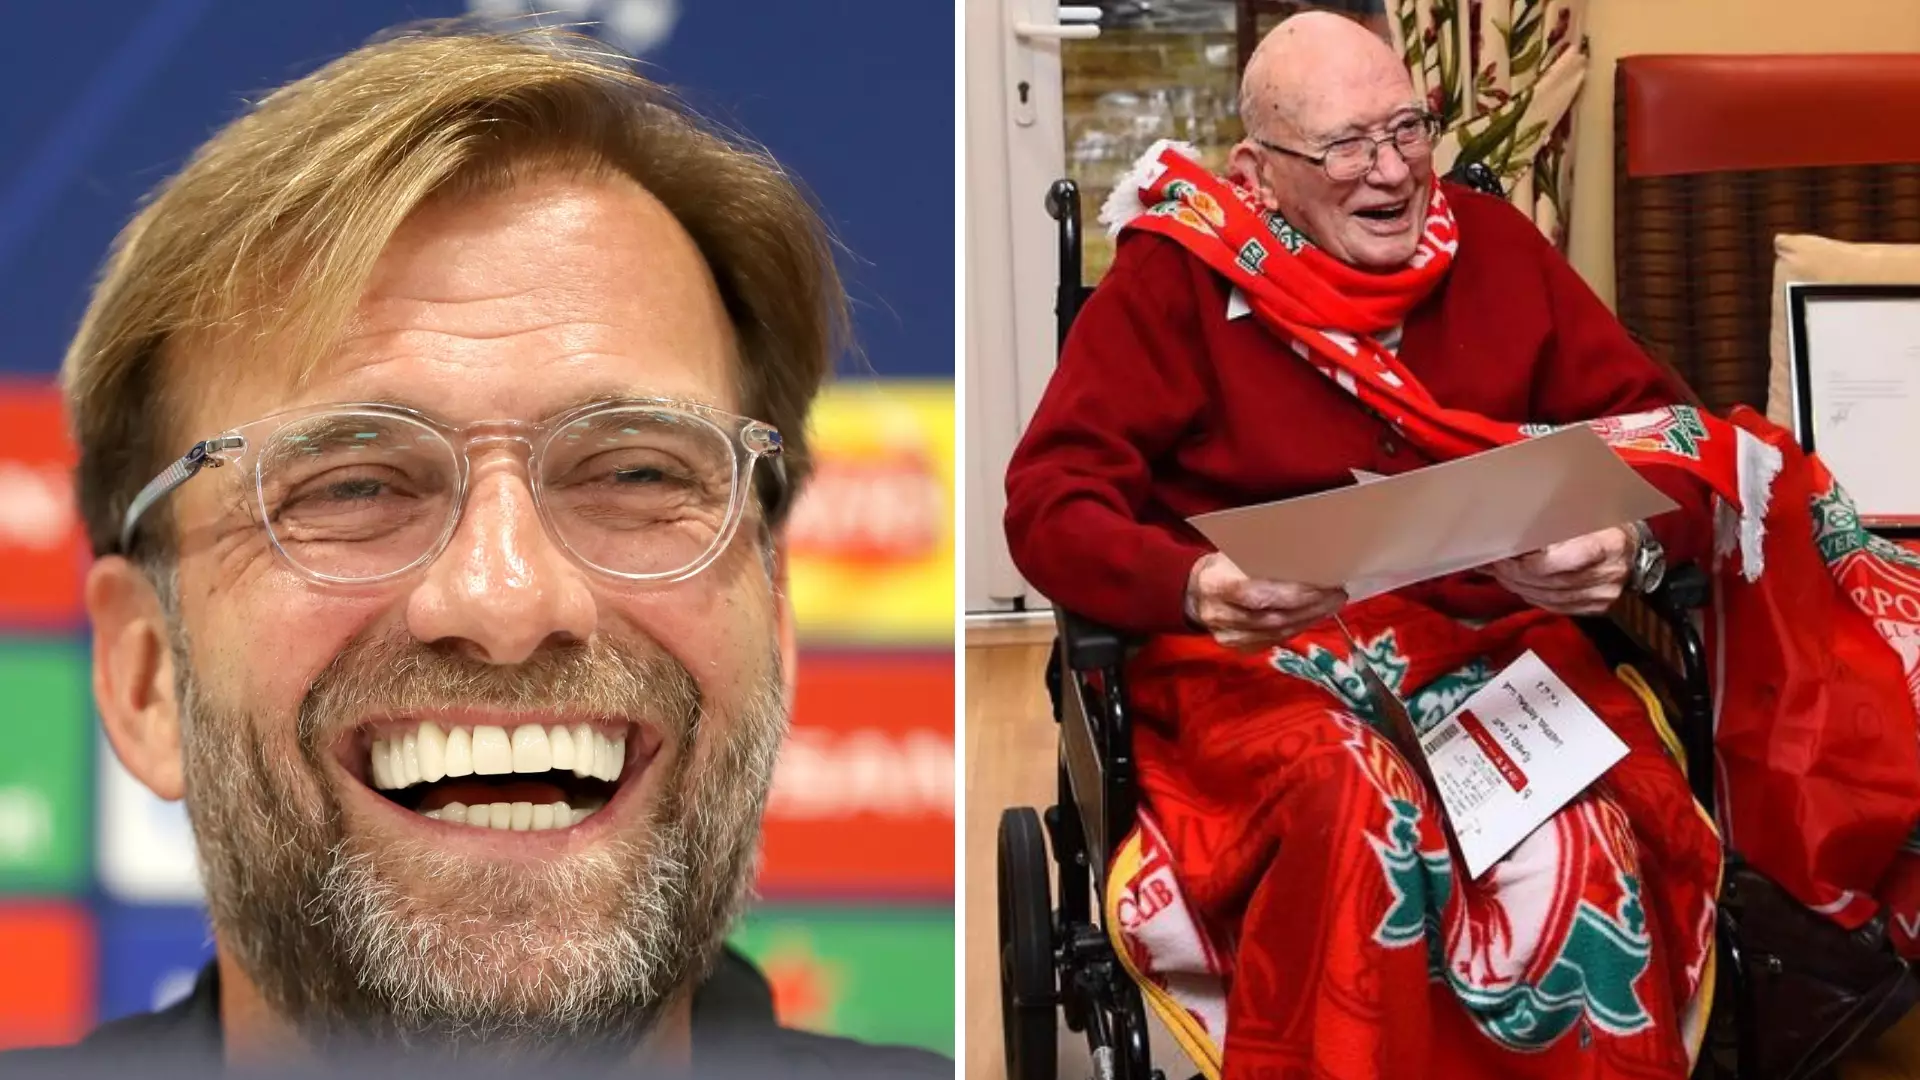 104-Year-Old Liverpool Superfan Gets An Amazing Birthday Gift From Jurgen Klopp